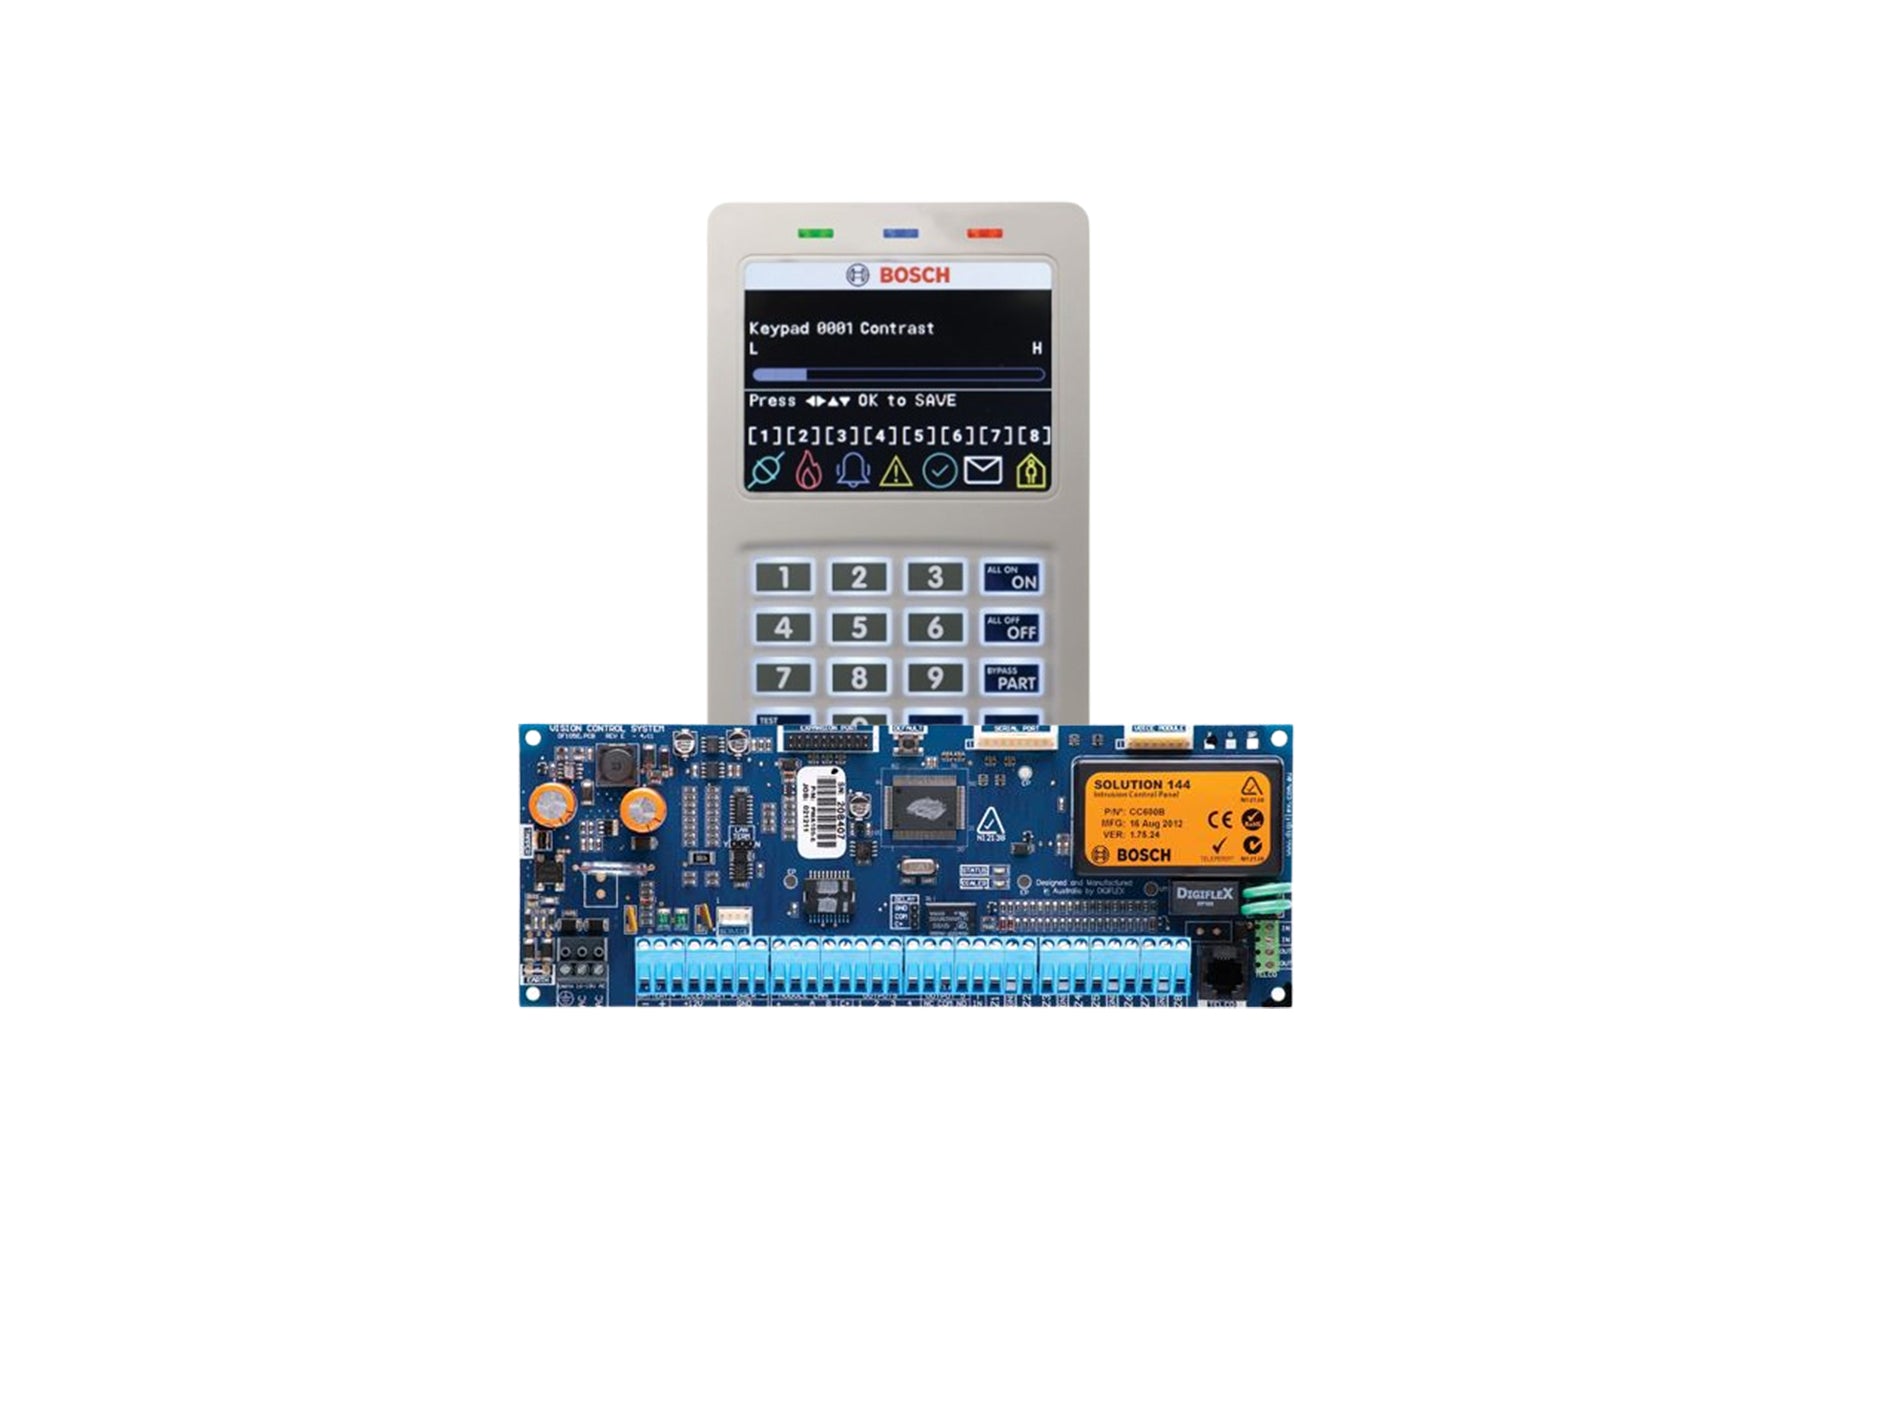 BOSCH, Solution 6000, Control panel PCB + WHITE Smart Prox key pad